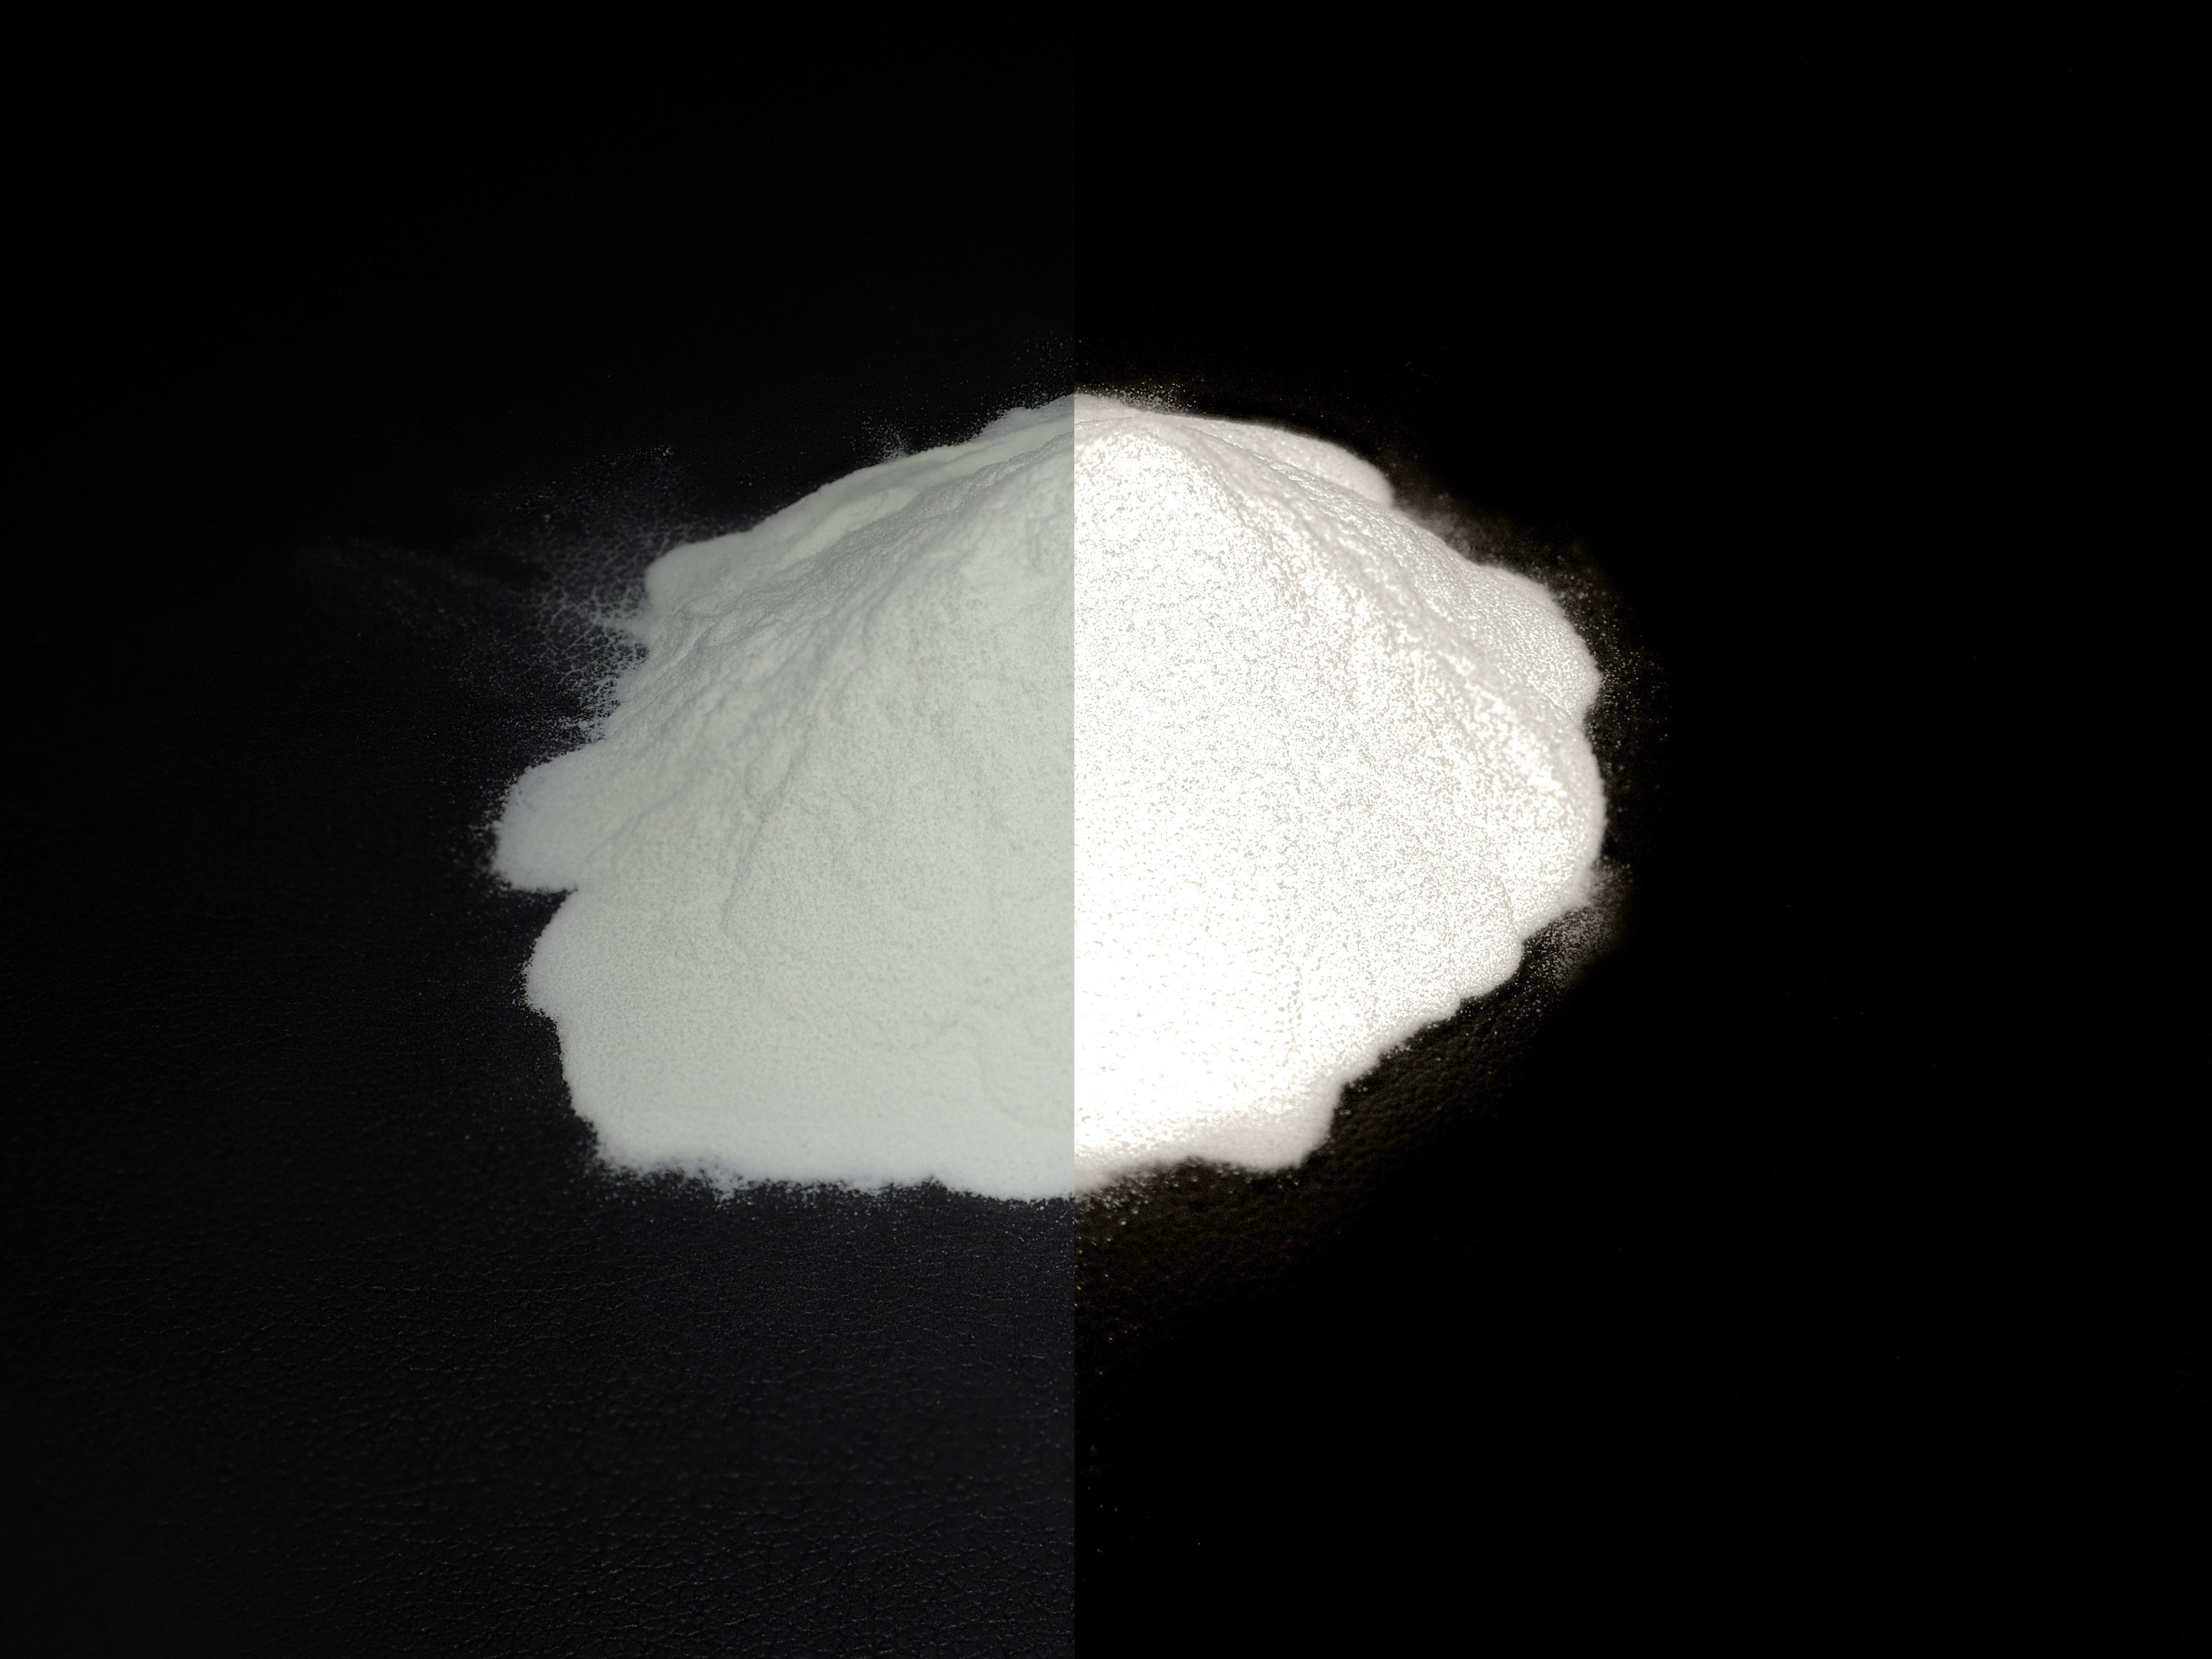 Luminous Glow-in-the-dark Pigment Powder 